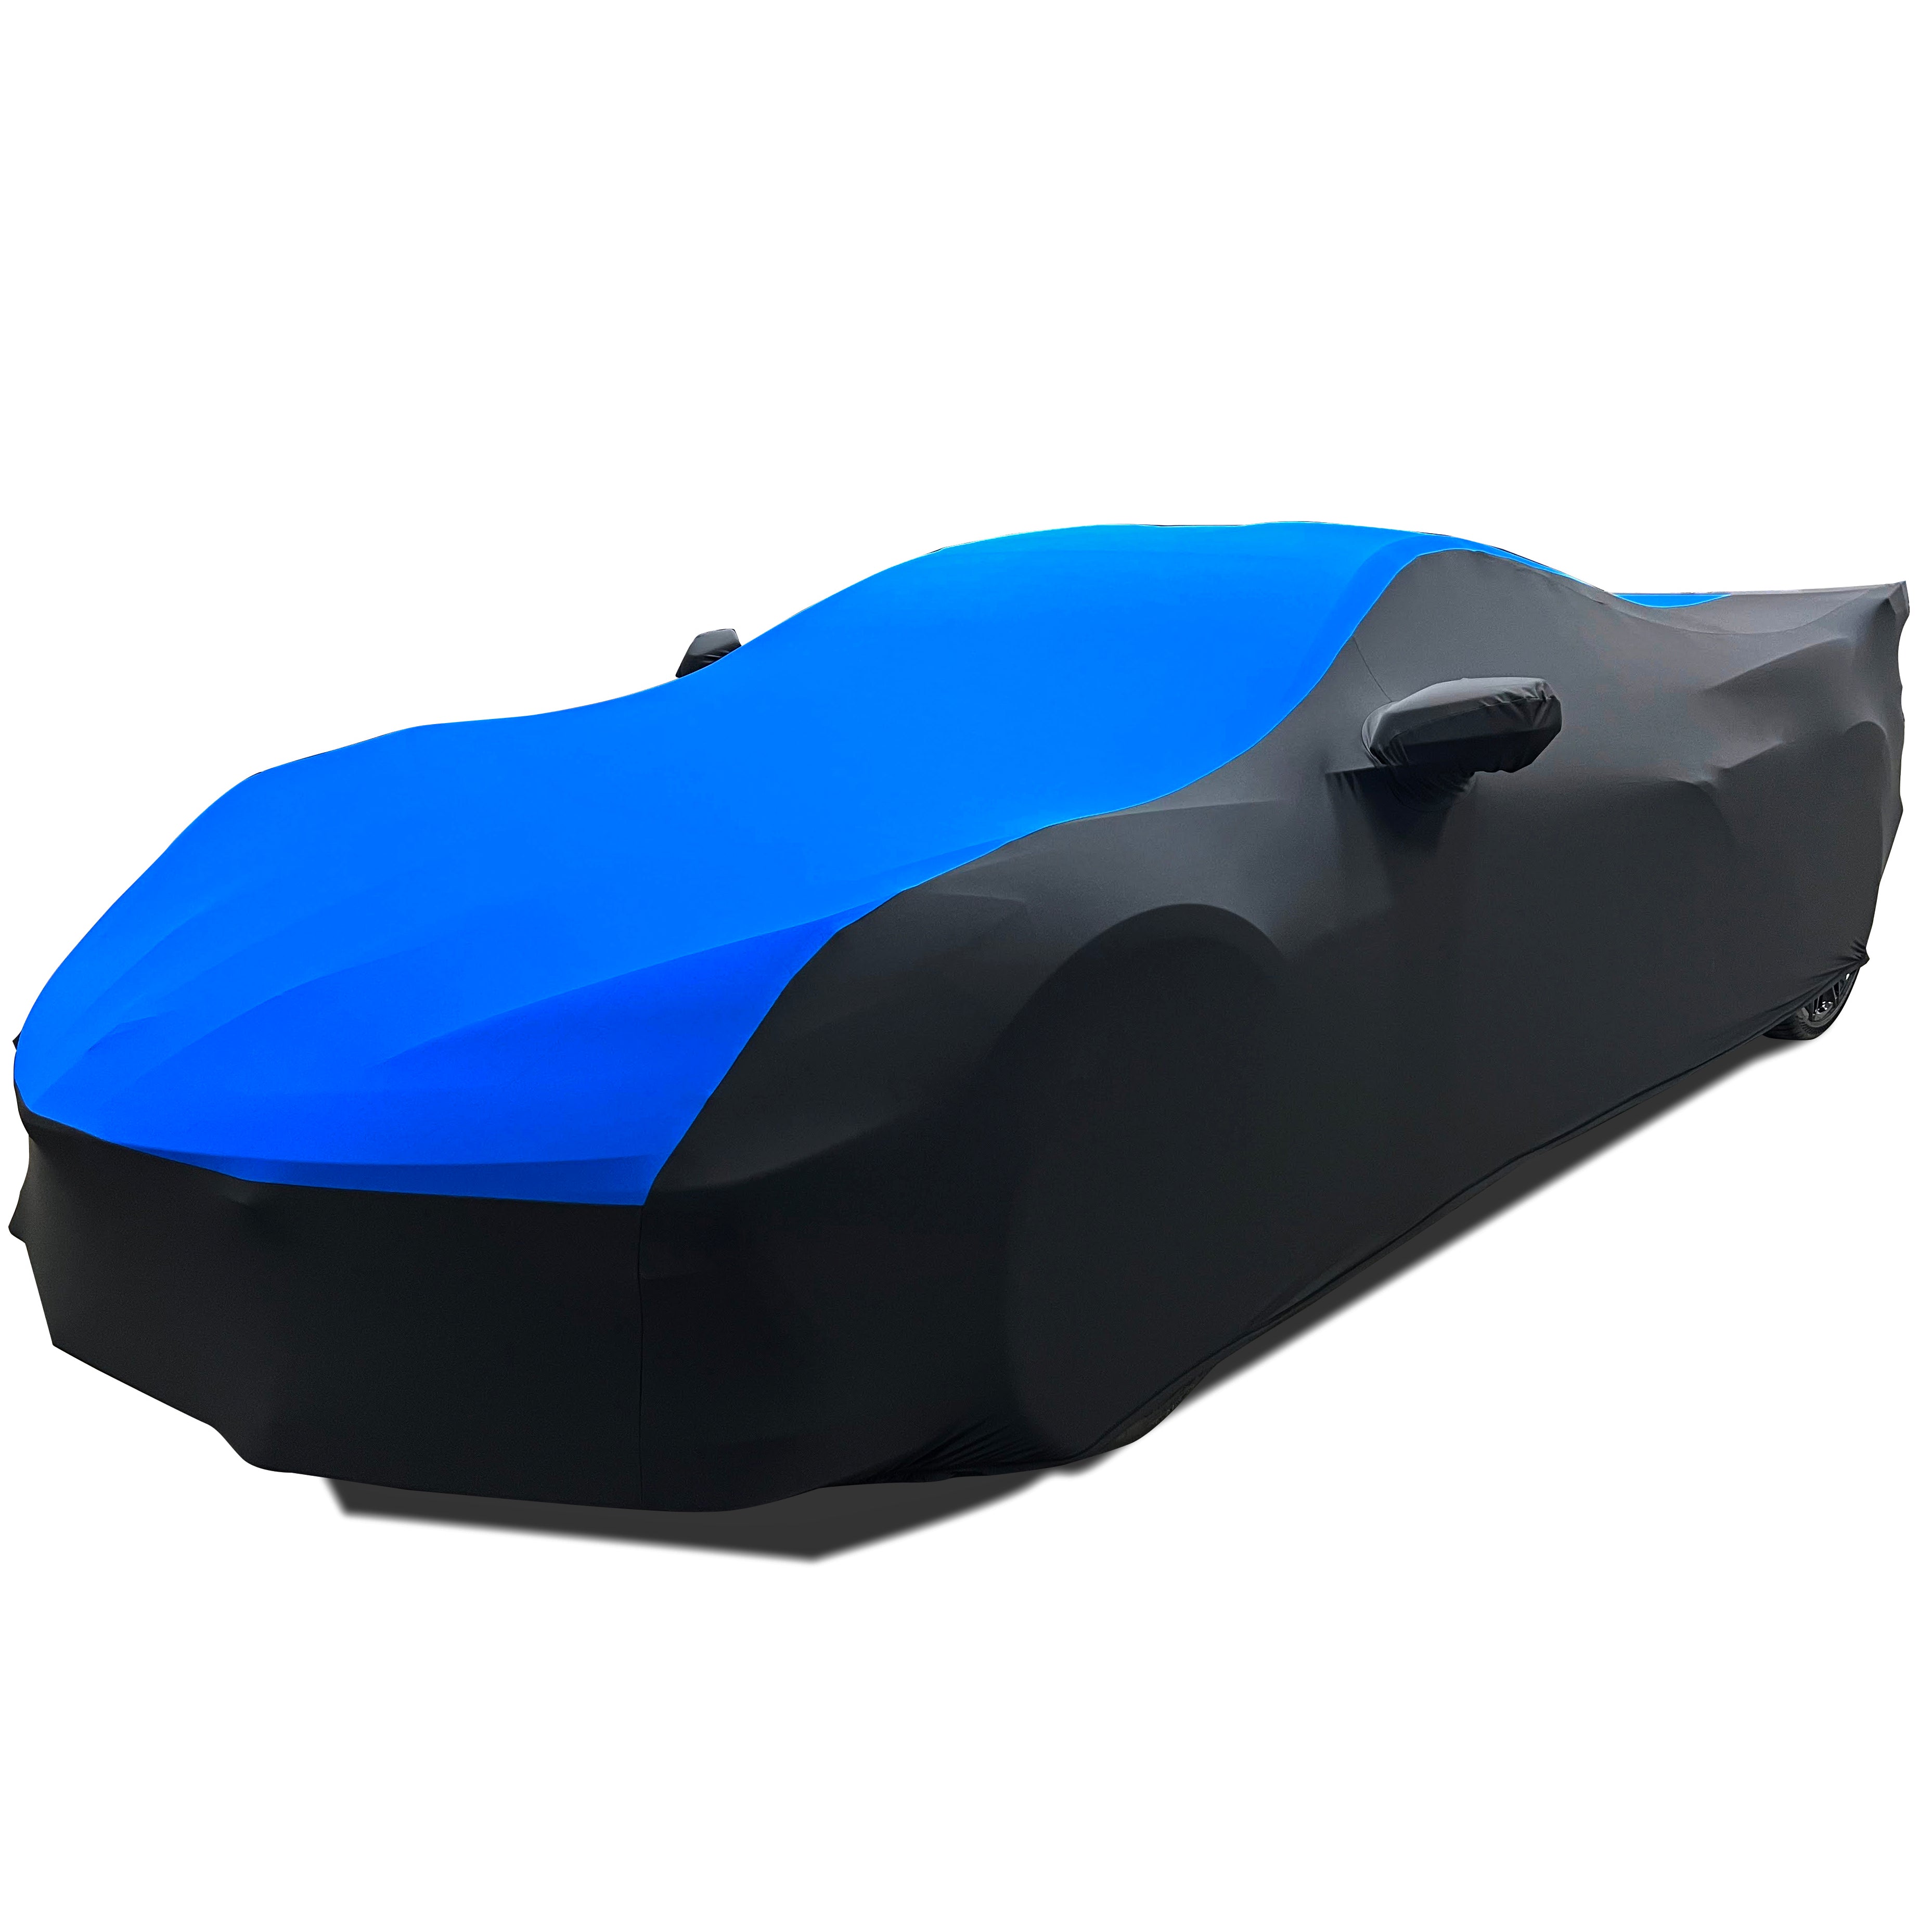 C8 Corvette Ultraguard Stretch Satin Sport Car Cover, Blue/Black, Indoor